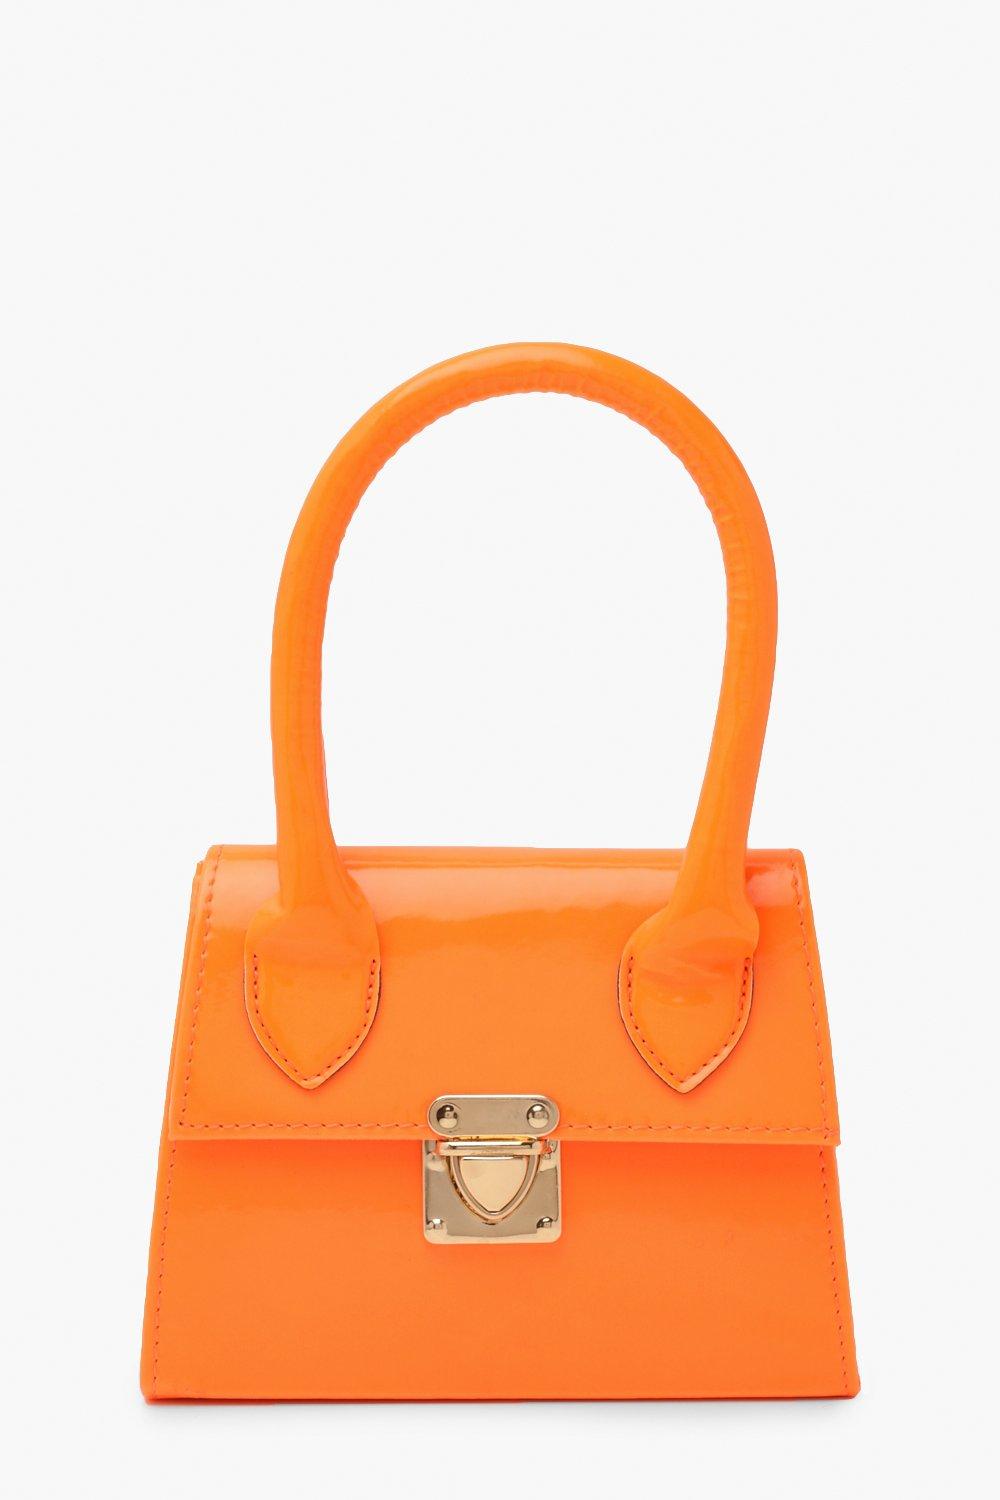 Boohoo Neon Micro Mini Structured Handle Grab Bag- Orange  - Size: ONE SIZE